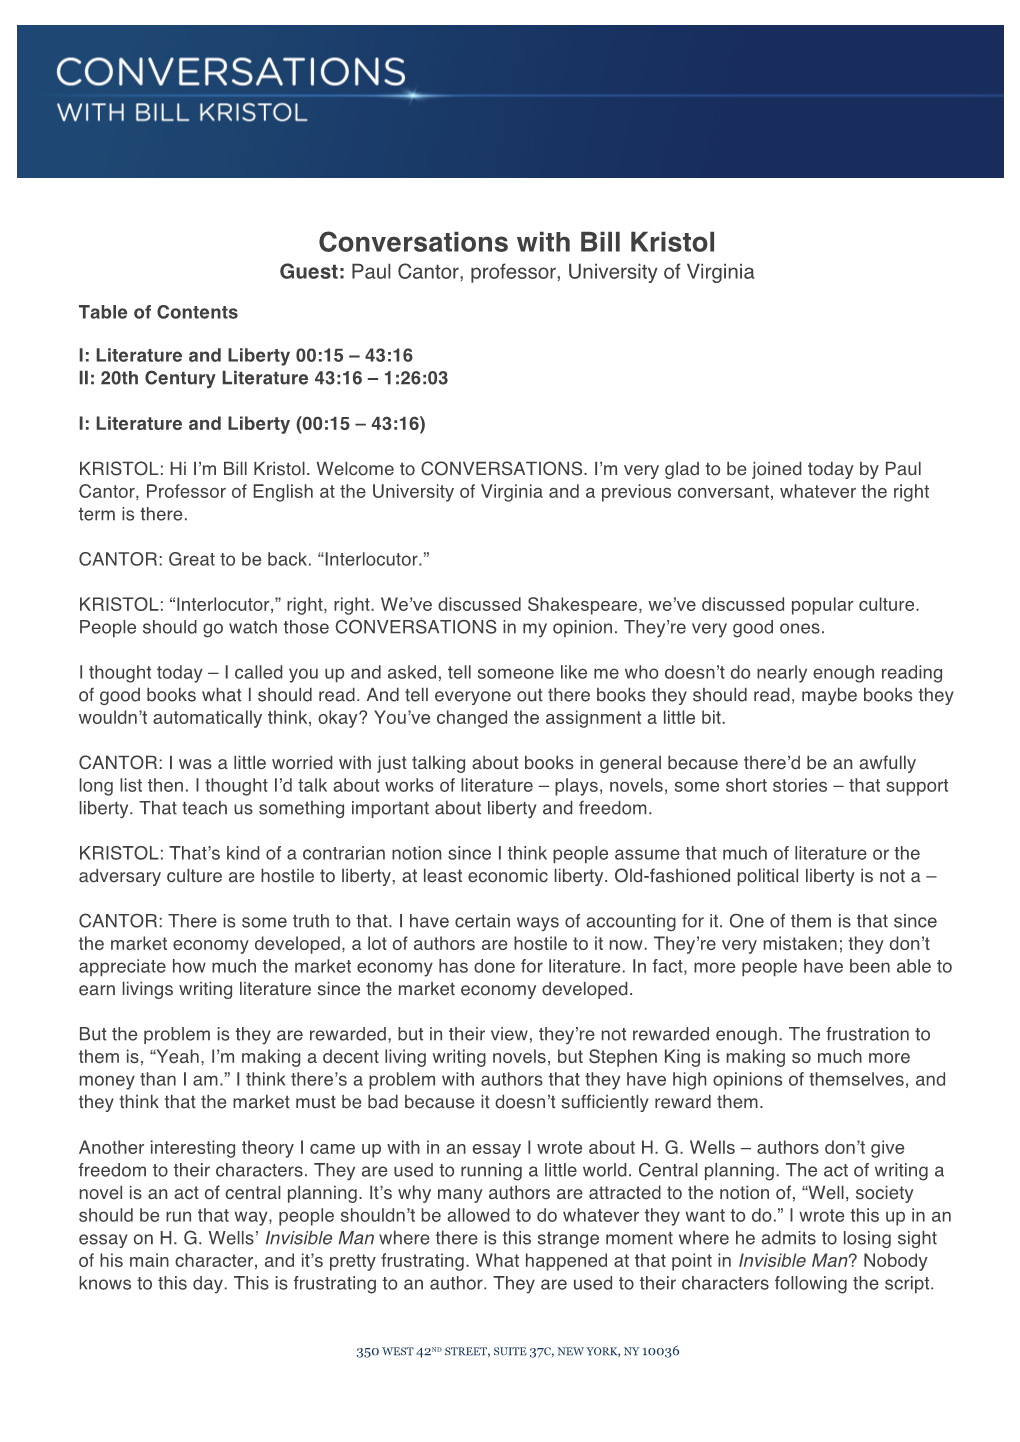 Conversations with Bill Kristol Guest: Paul Cantor, Professor, University of Virginia